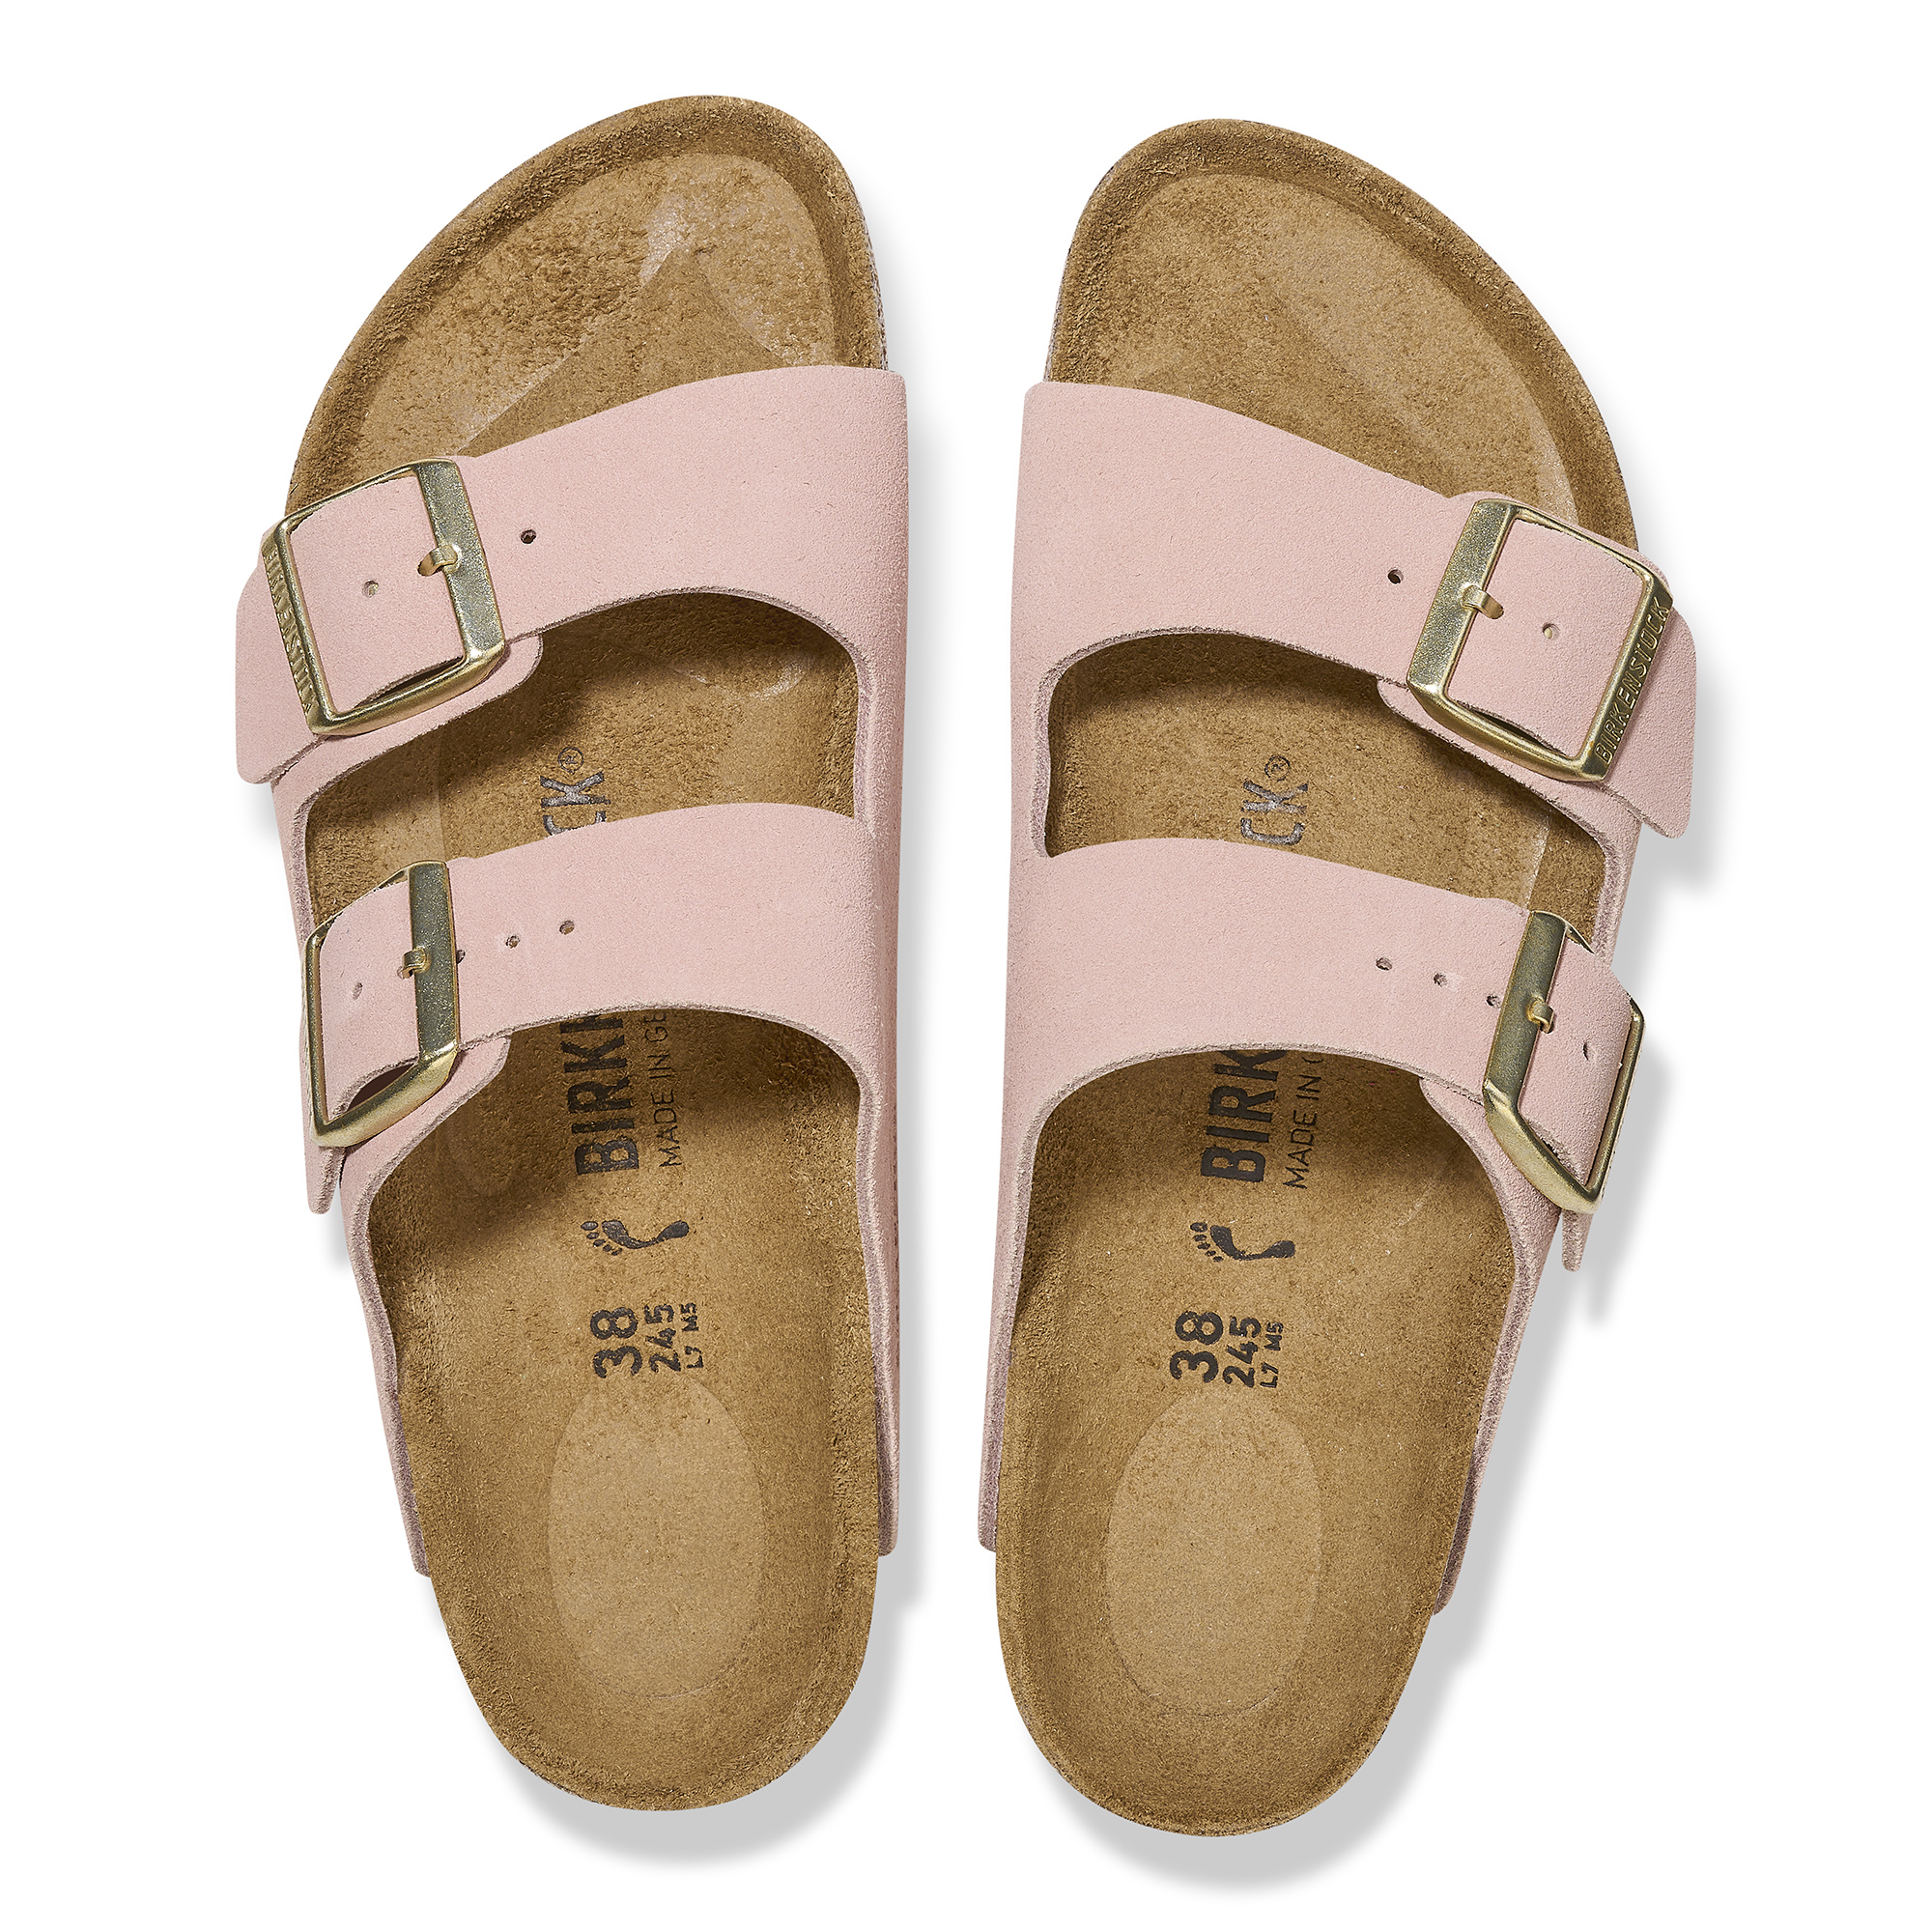 Birkenstock Women's Arizona Shearling Footbed Sandals (Desert Light Rose) - Size 38.0 M